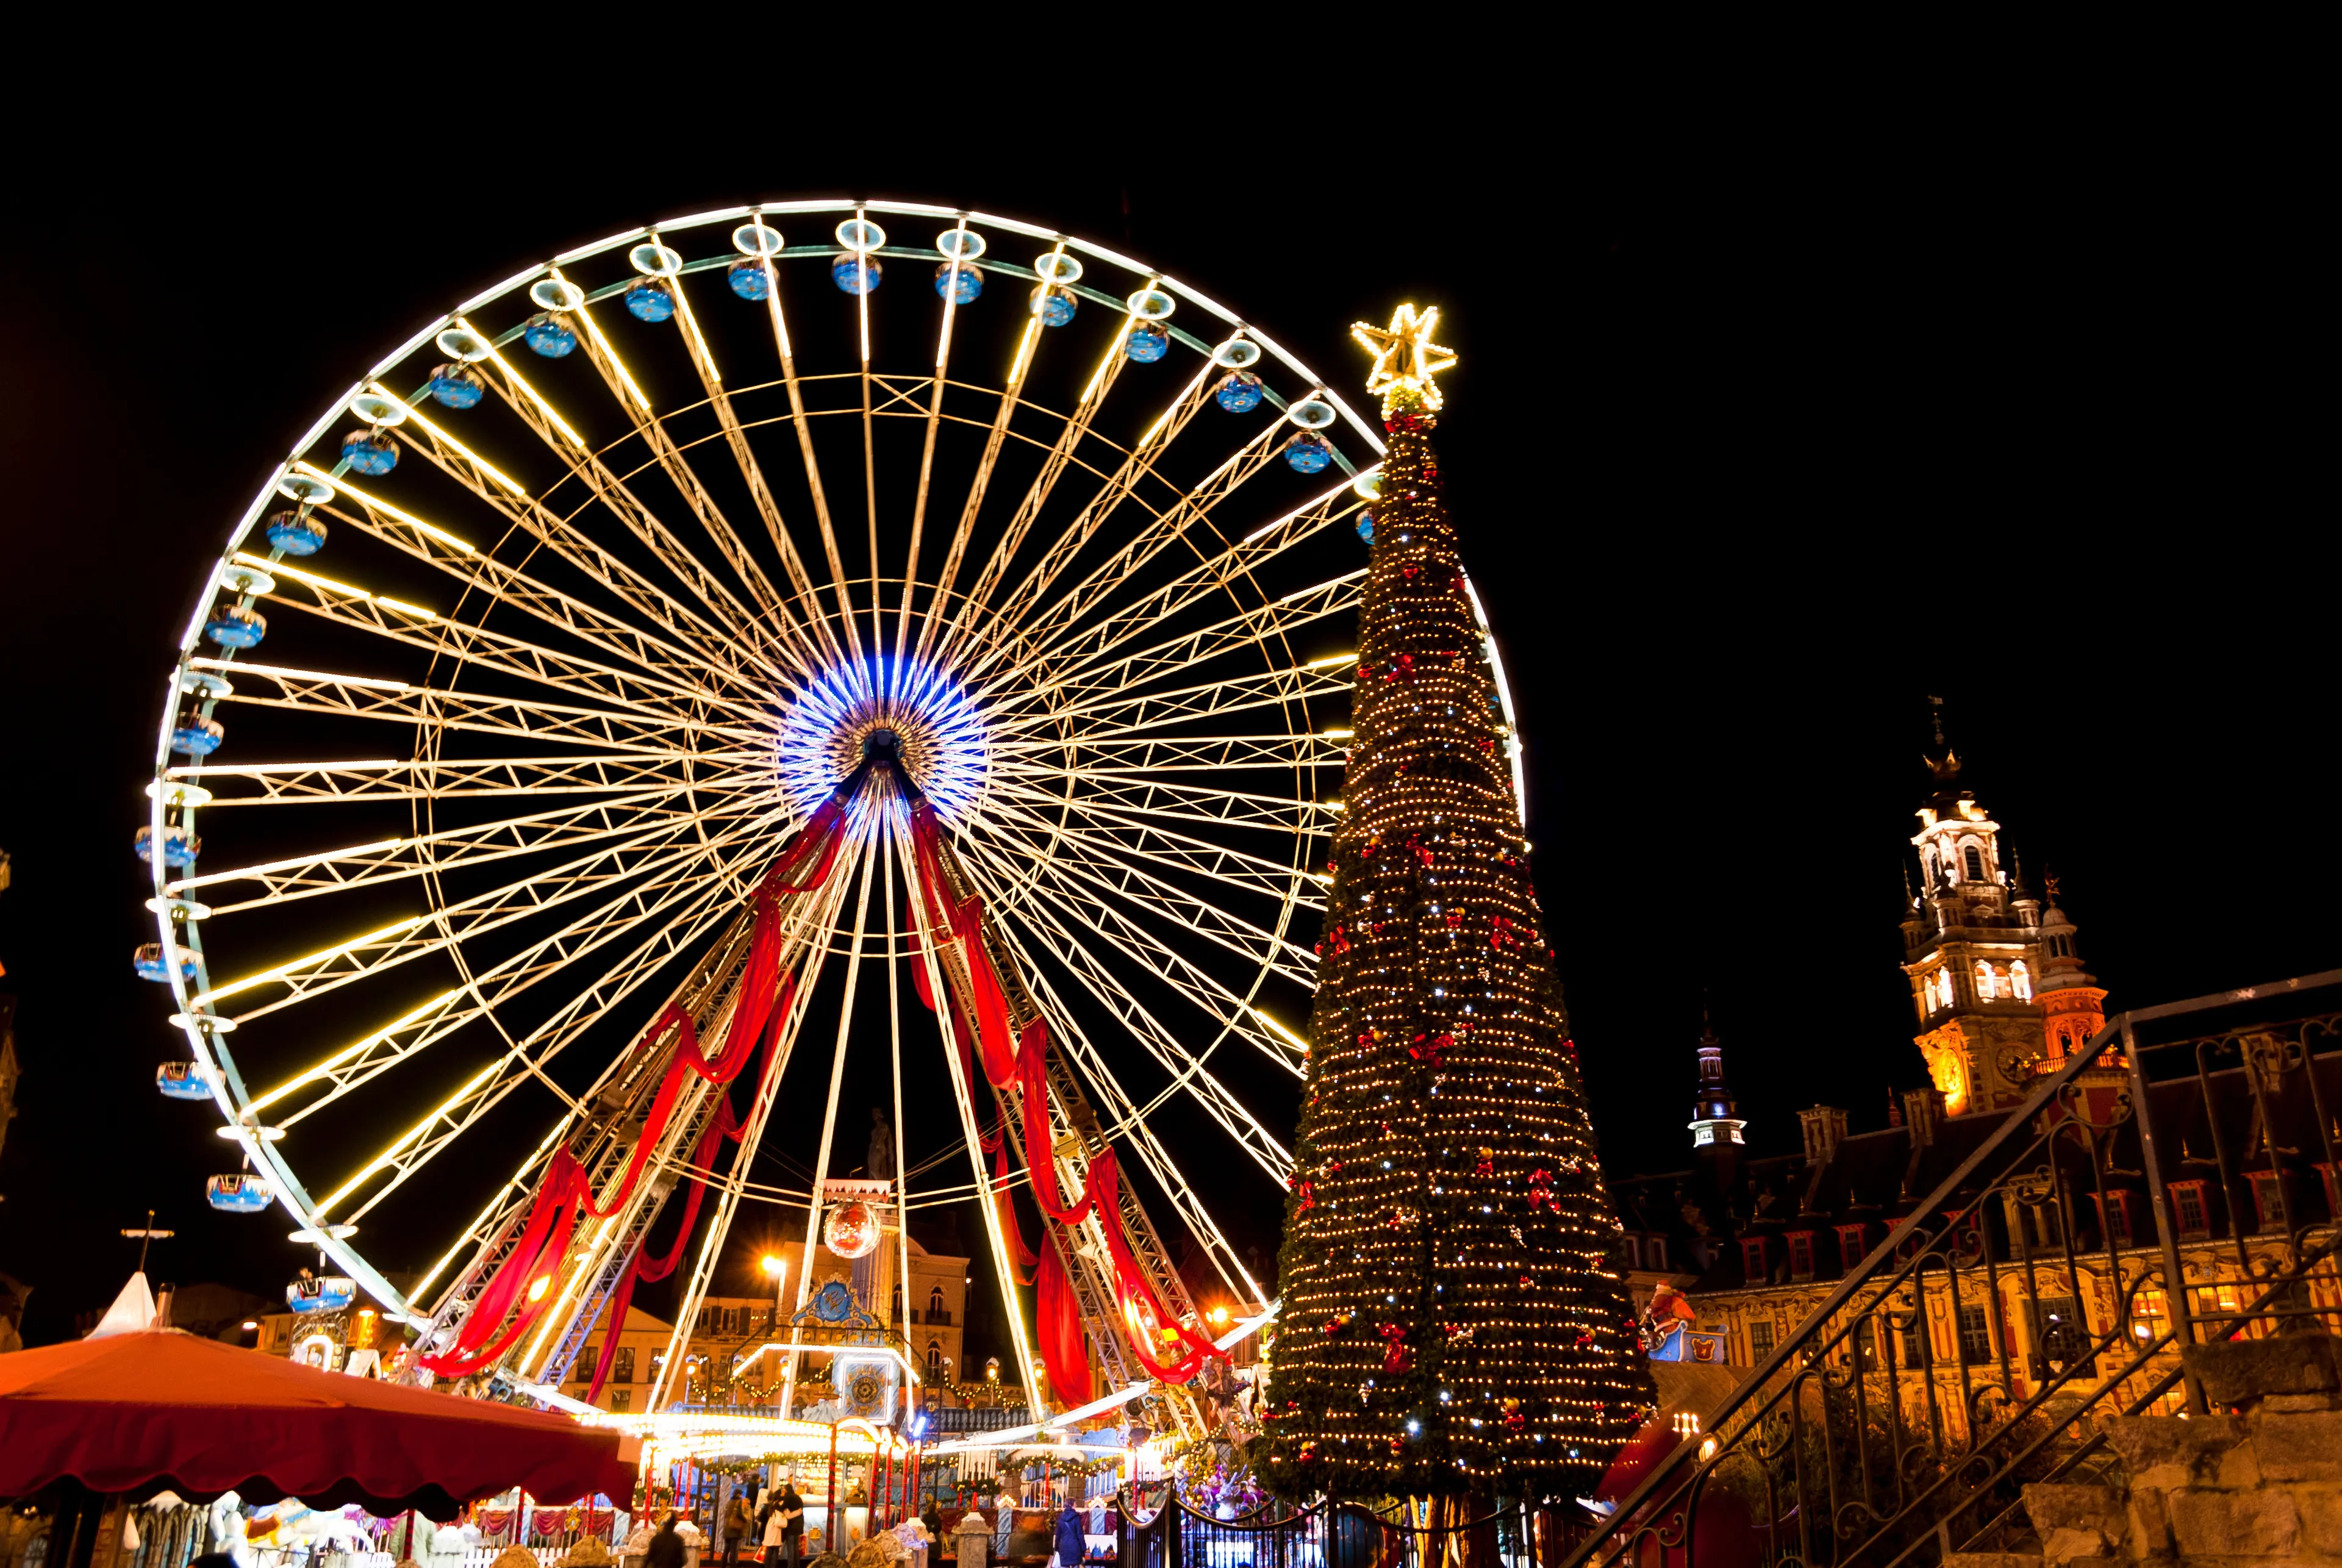 Ferris wheel on the main square